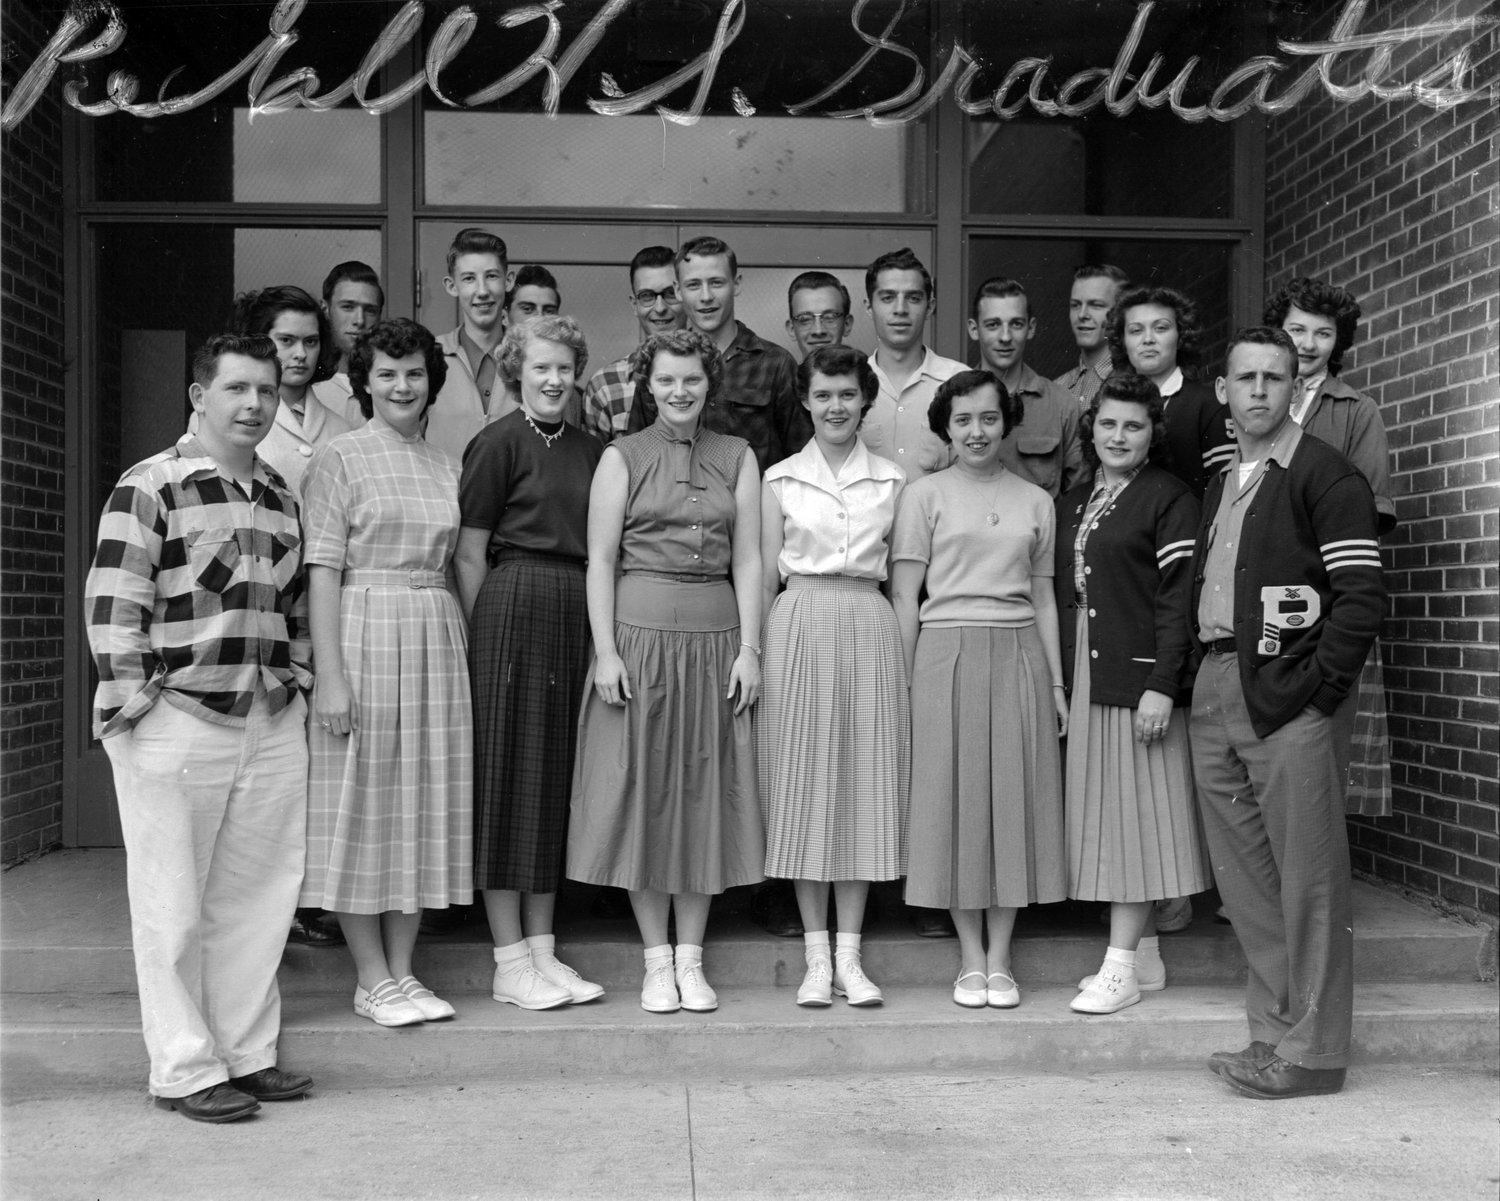 The Pe Ell School Class of 1954.